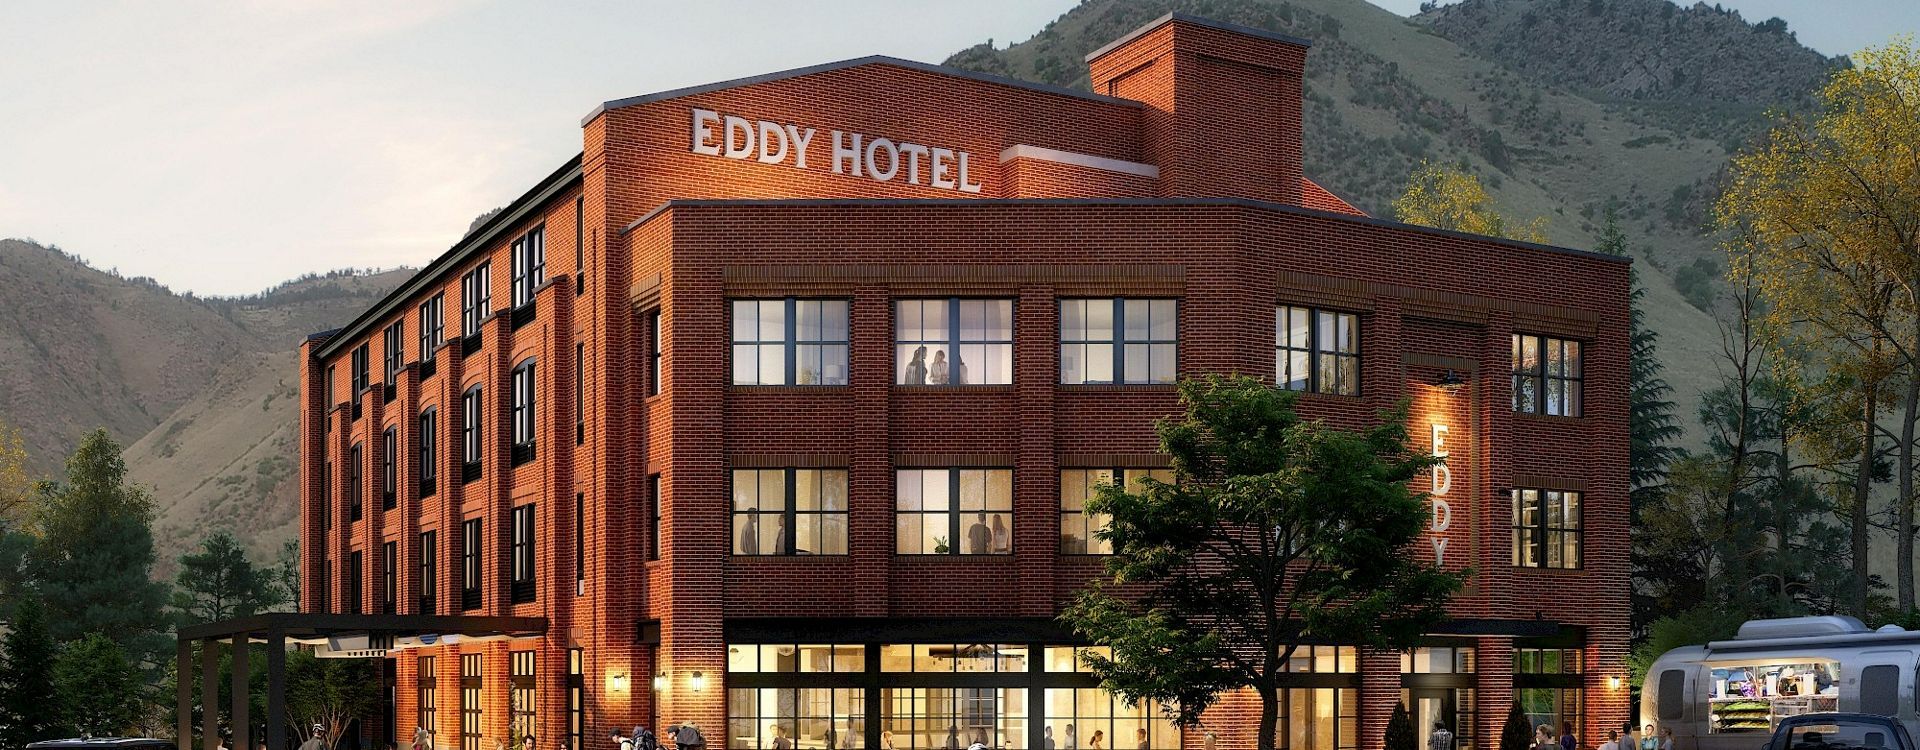 eddy-best-hotel-golden-colorado.jpg